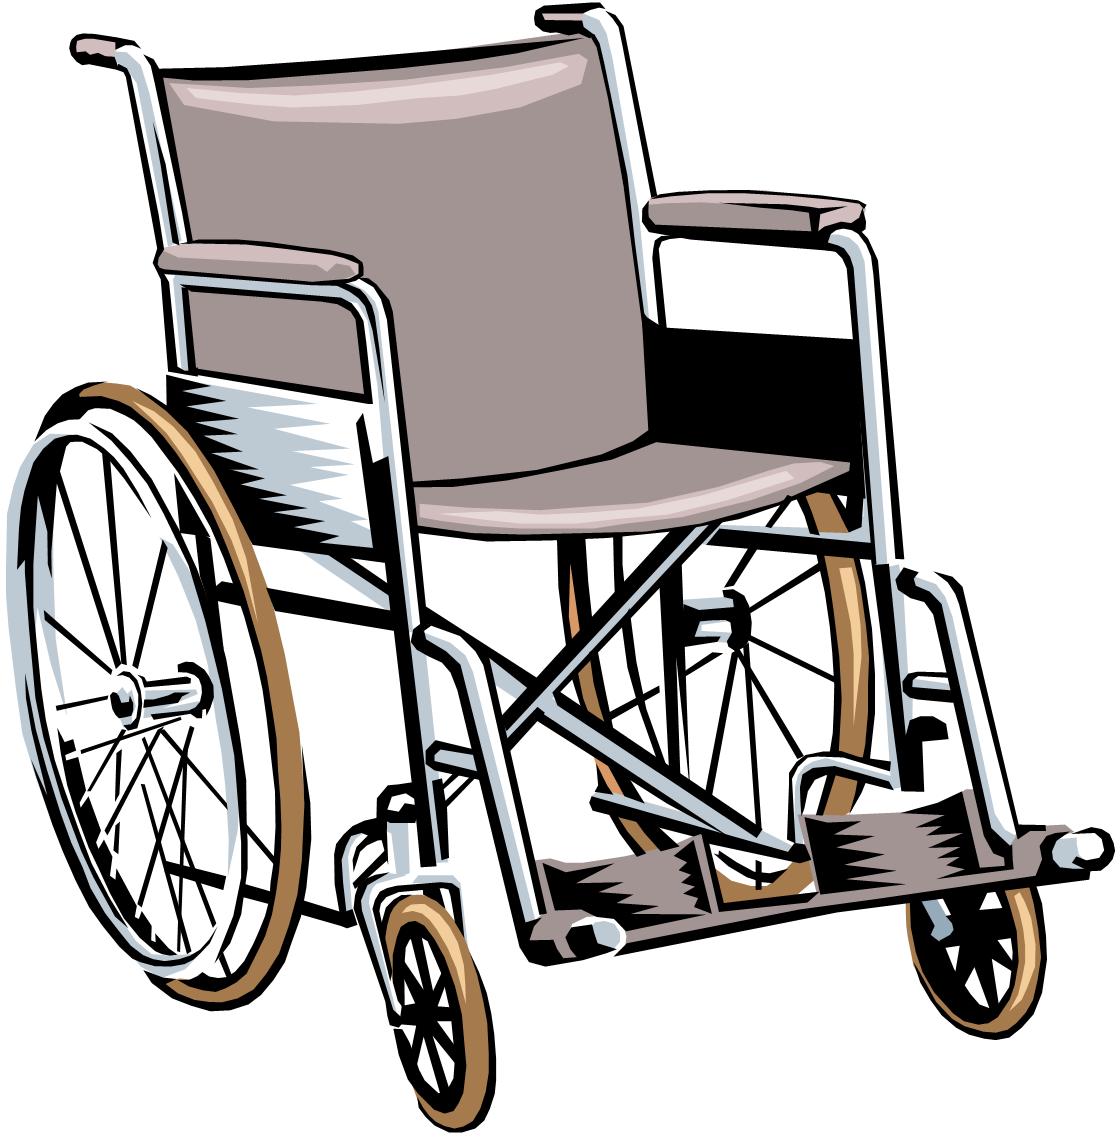 Wheelchair Medical Equipment Clip Art